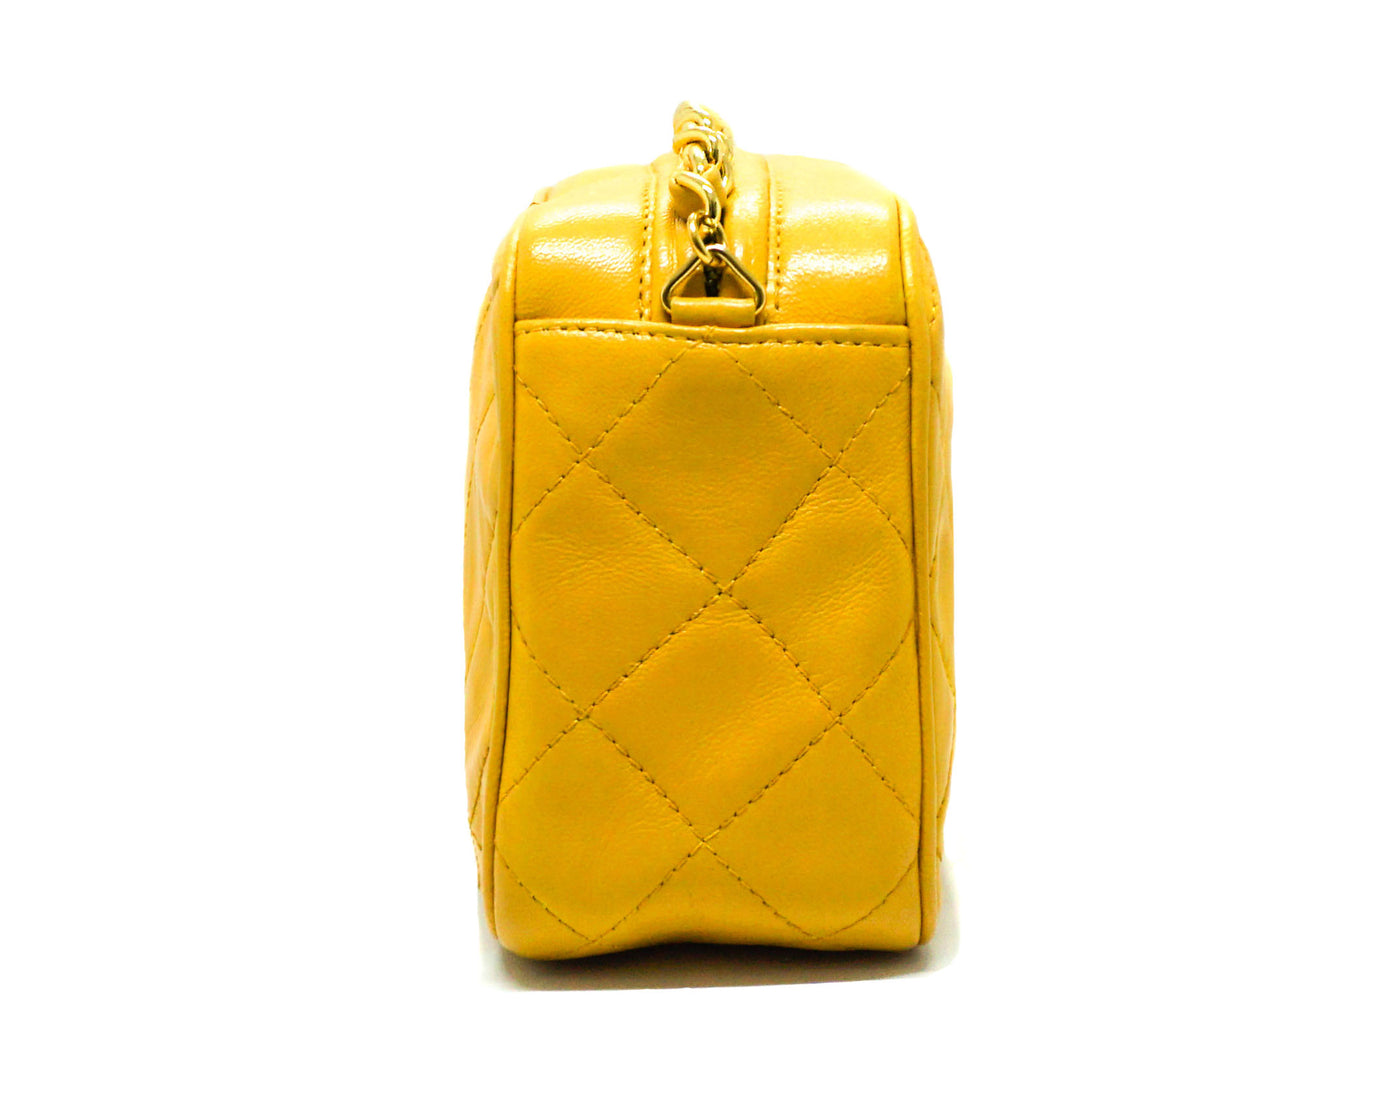 Chanel Vintage Yellow Rare Lambskin Camera Bag